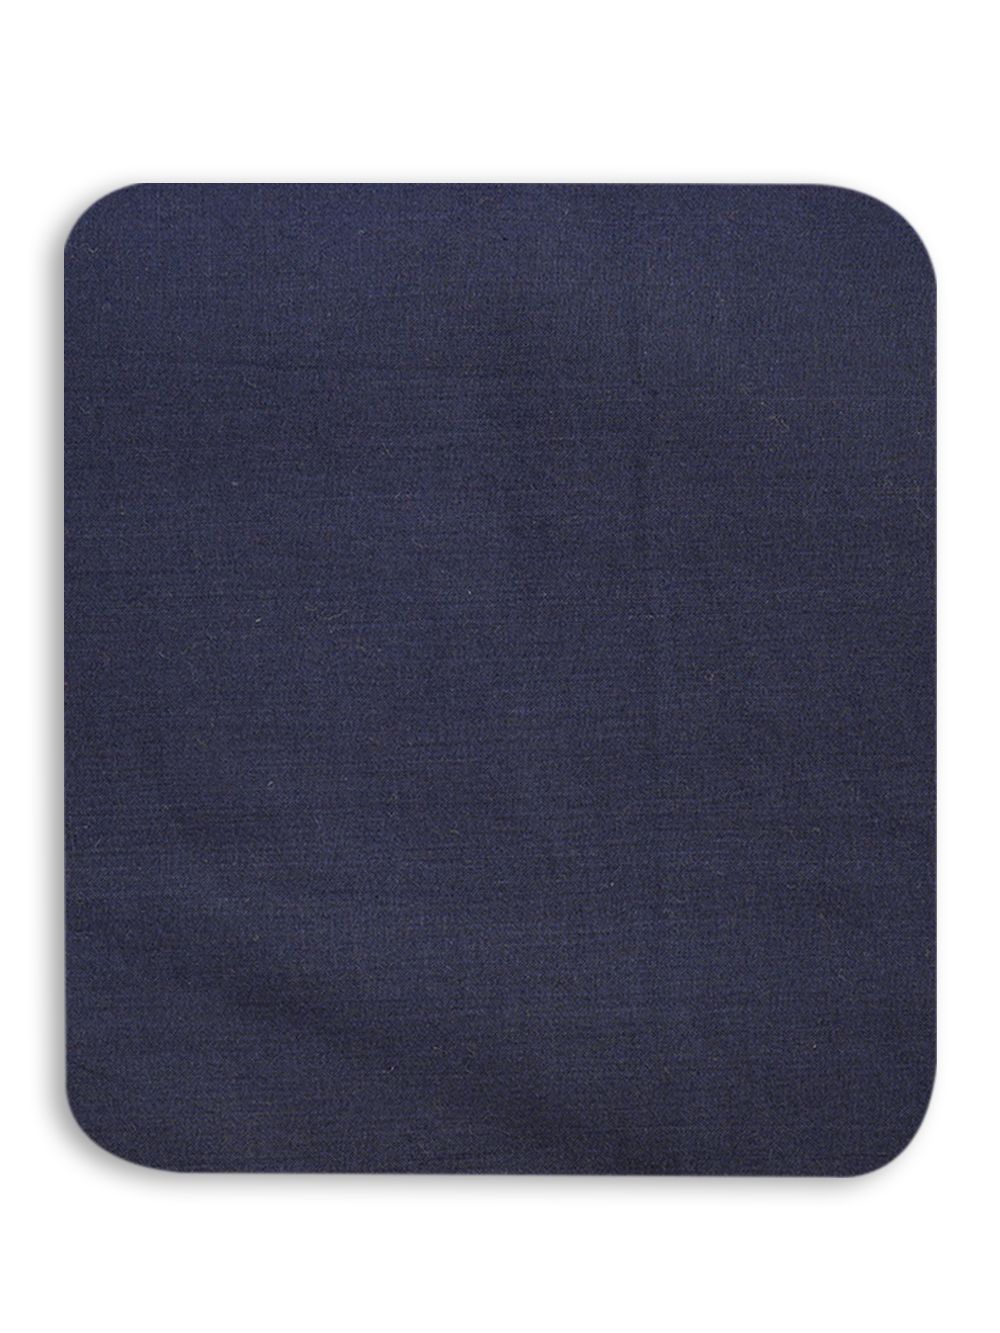 Orange -Blue Ikat mercerised  Cotton Fabric with Dupatta  (Set Of 3)